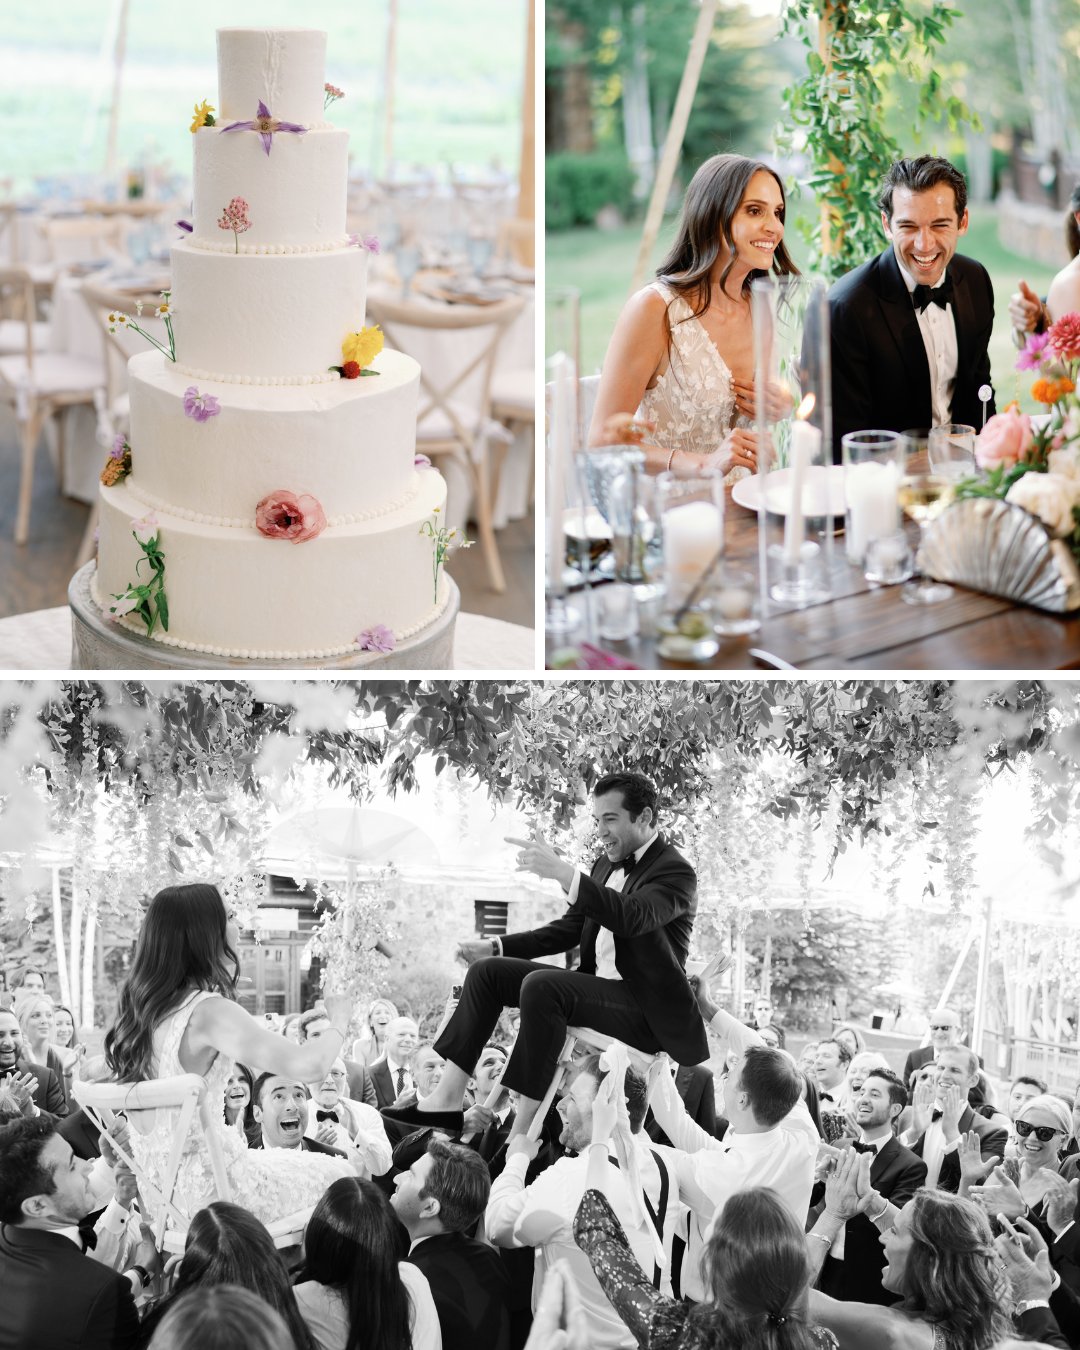 five tier wedding cake, couple enjoying reception